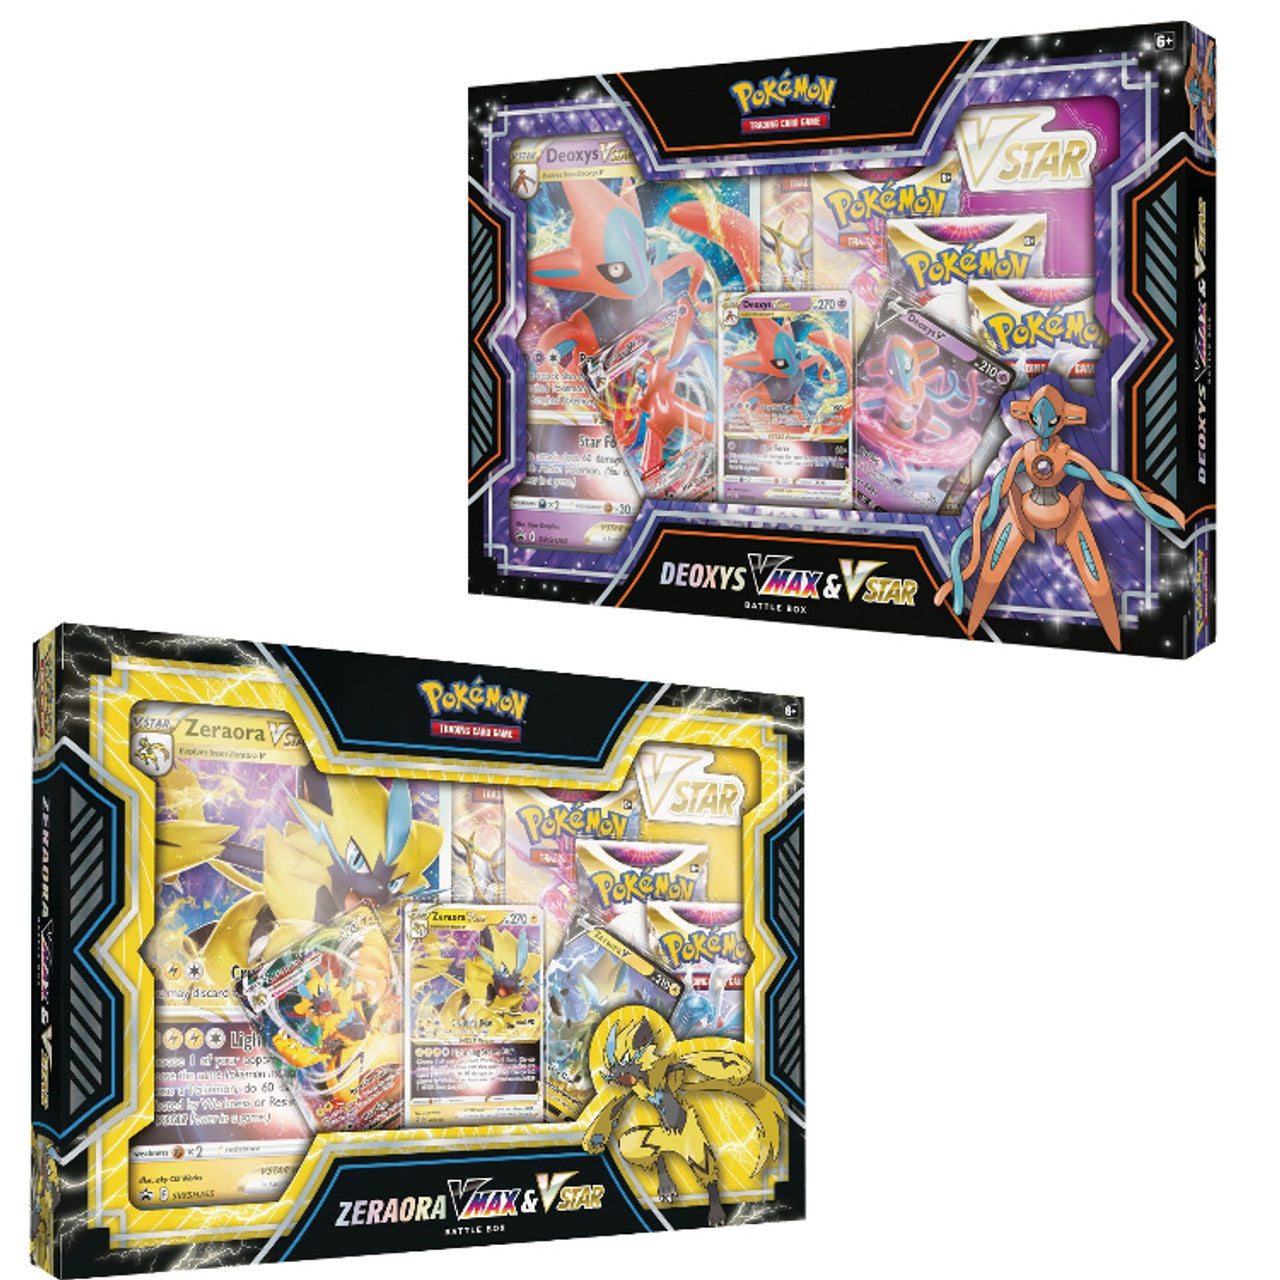 Pokemon VMax & VStar Battle Box Deoxys/Zeraora | Kessel Run Games Inc. 